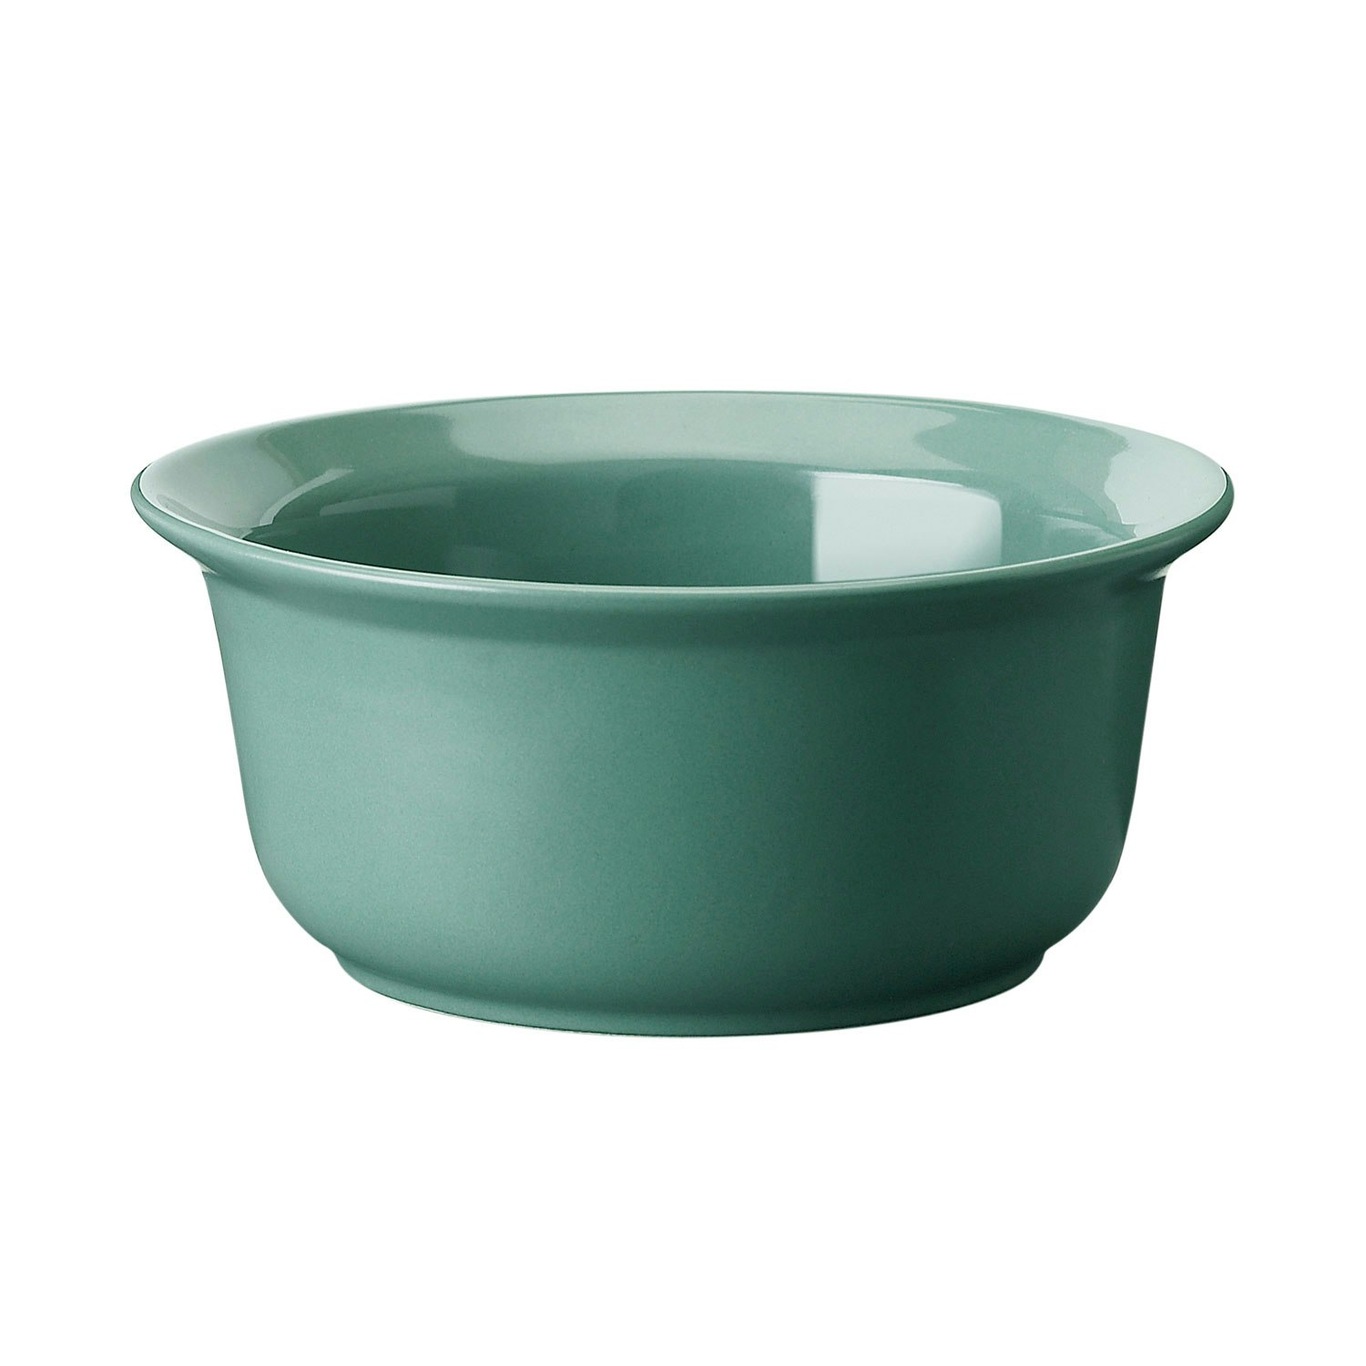 https://royaldesign.com/image/2/rig-tig-by-stelton-cook-serve-ovenproof-bowl-green-4?w=800&quality=80